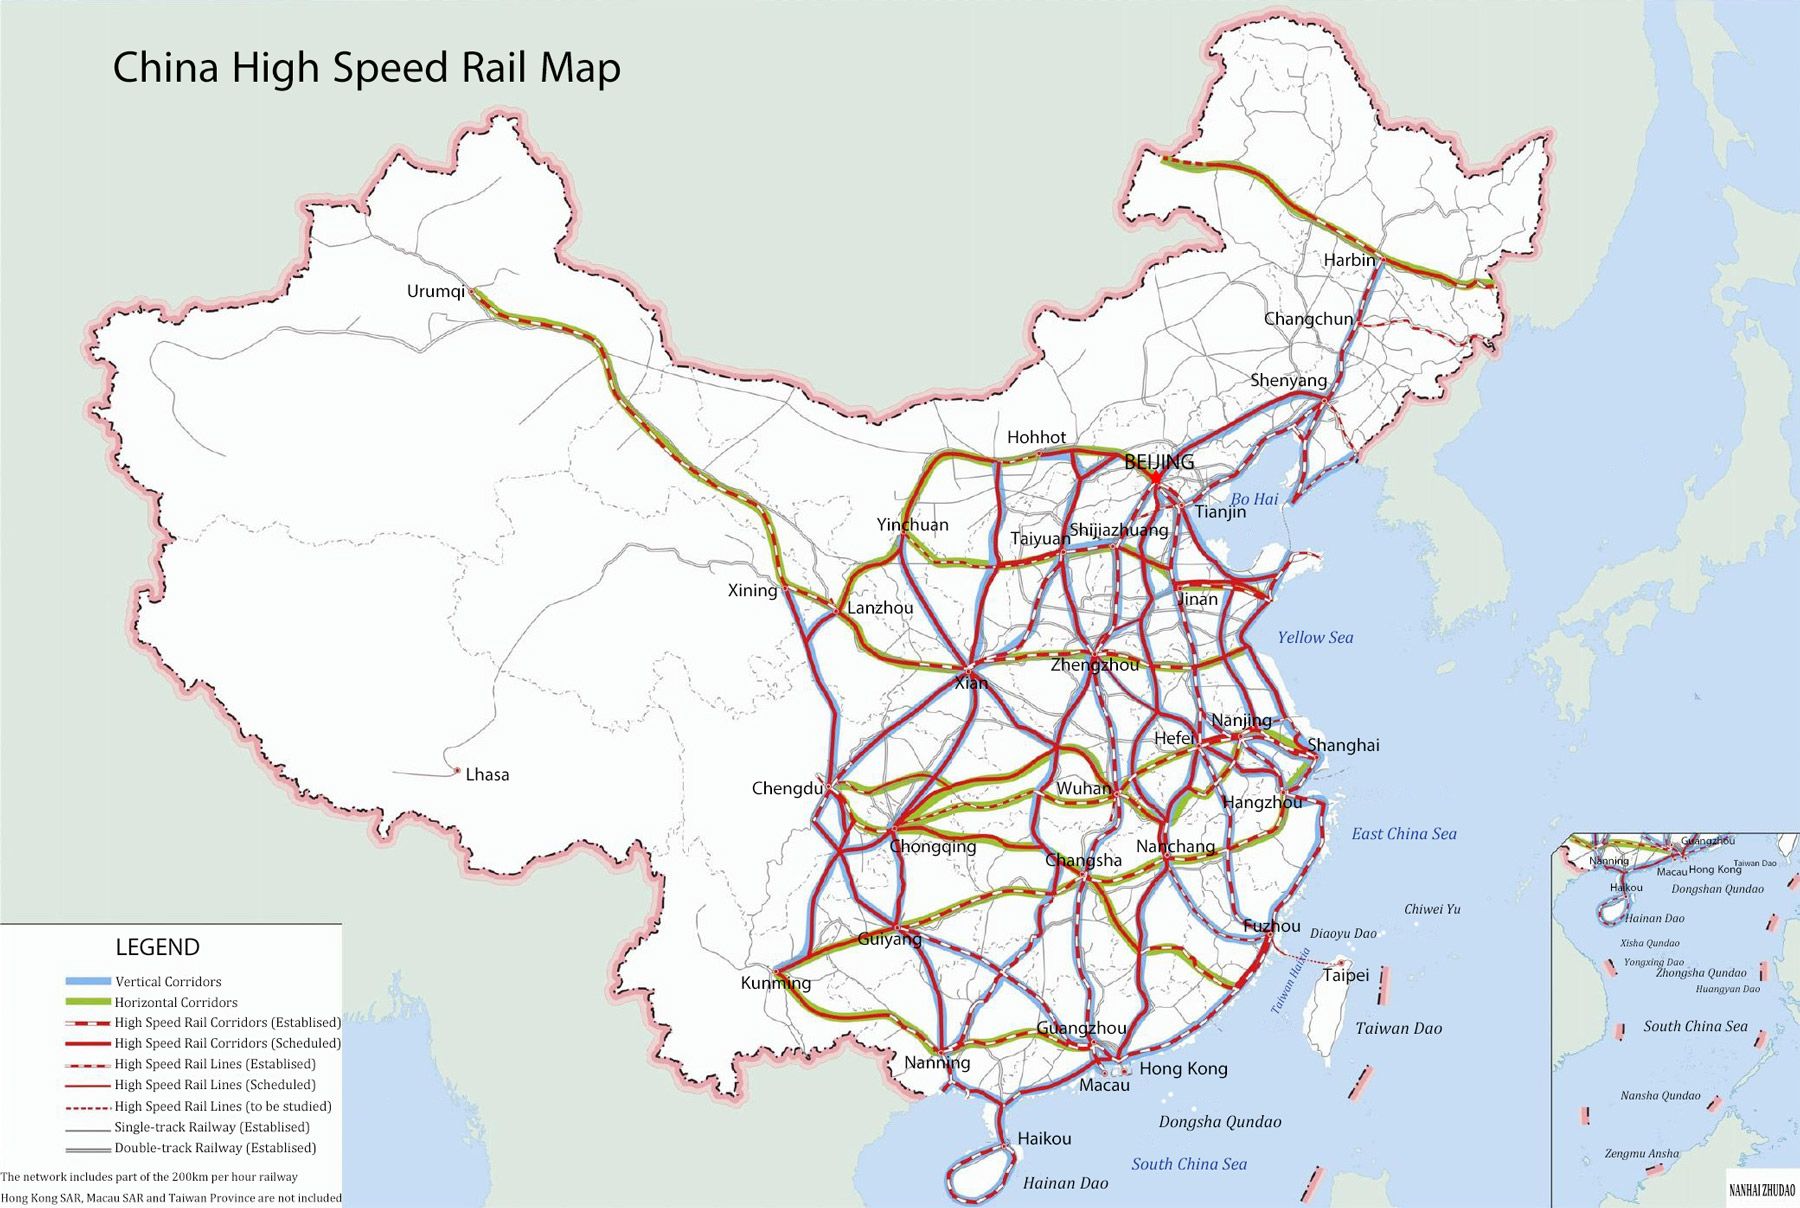 China High Speed Railway Map 2018 - China Discovery